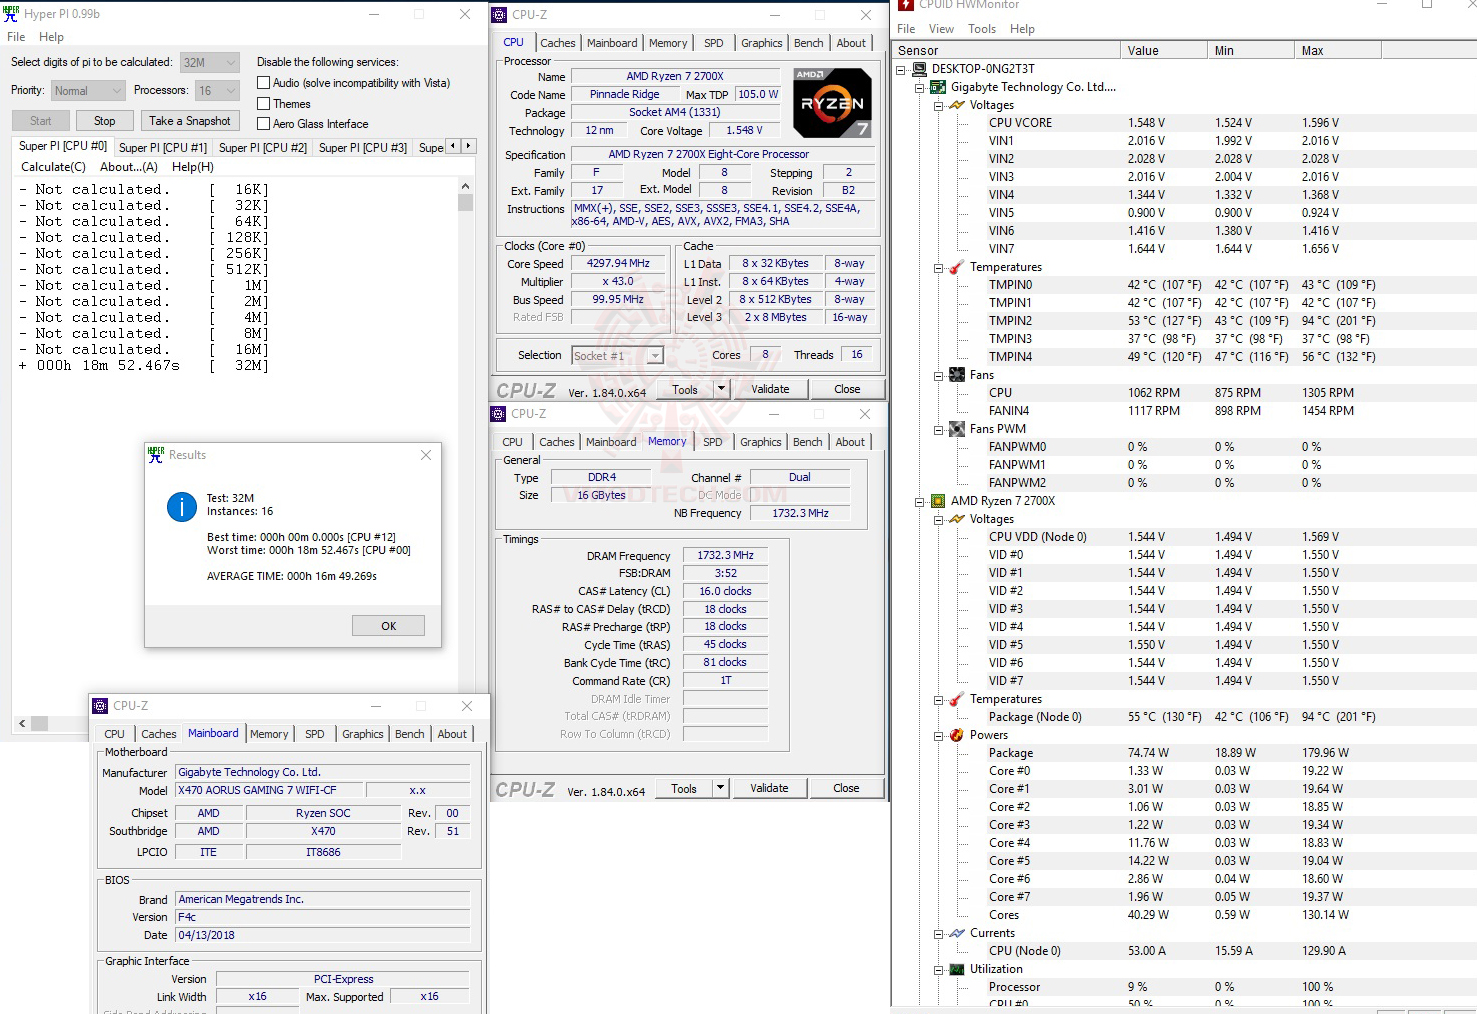 h32 oc AMD RYZEN 7 2700X PROCESSOR REVIEW